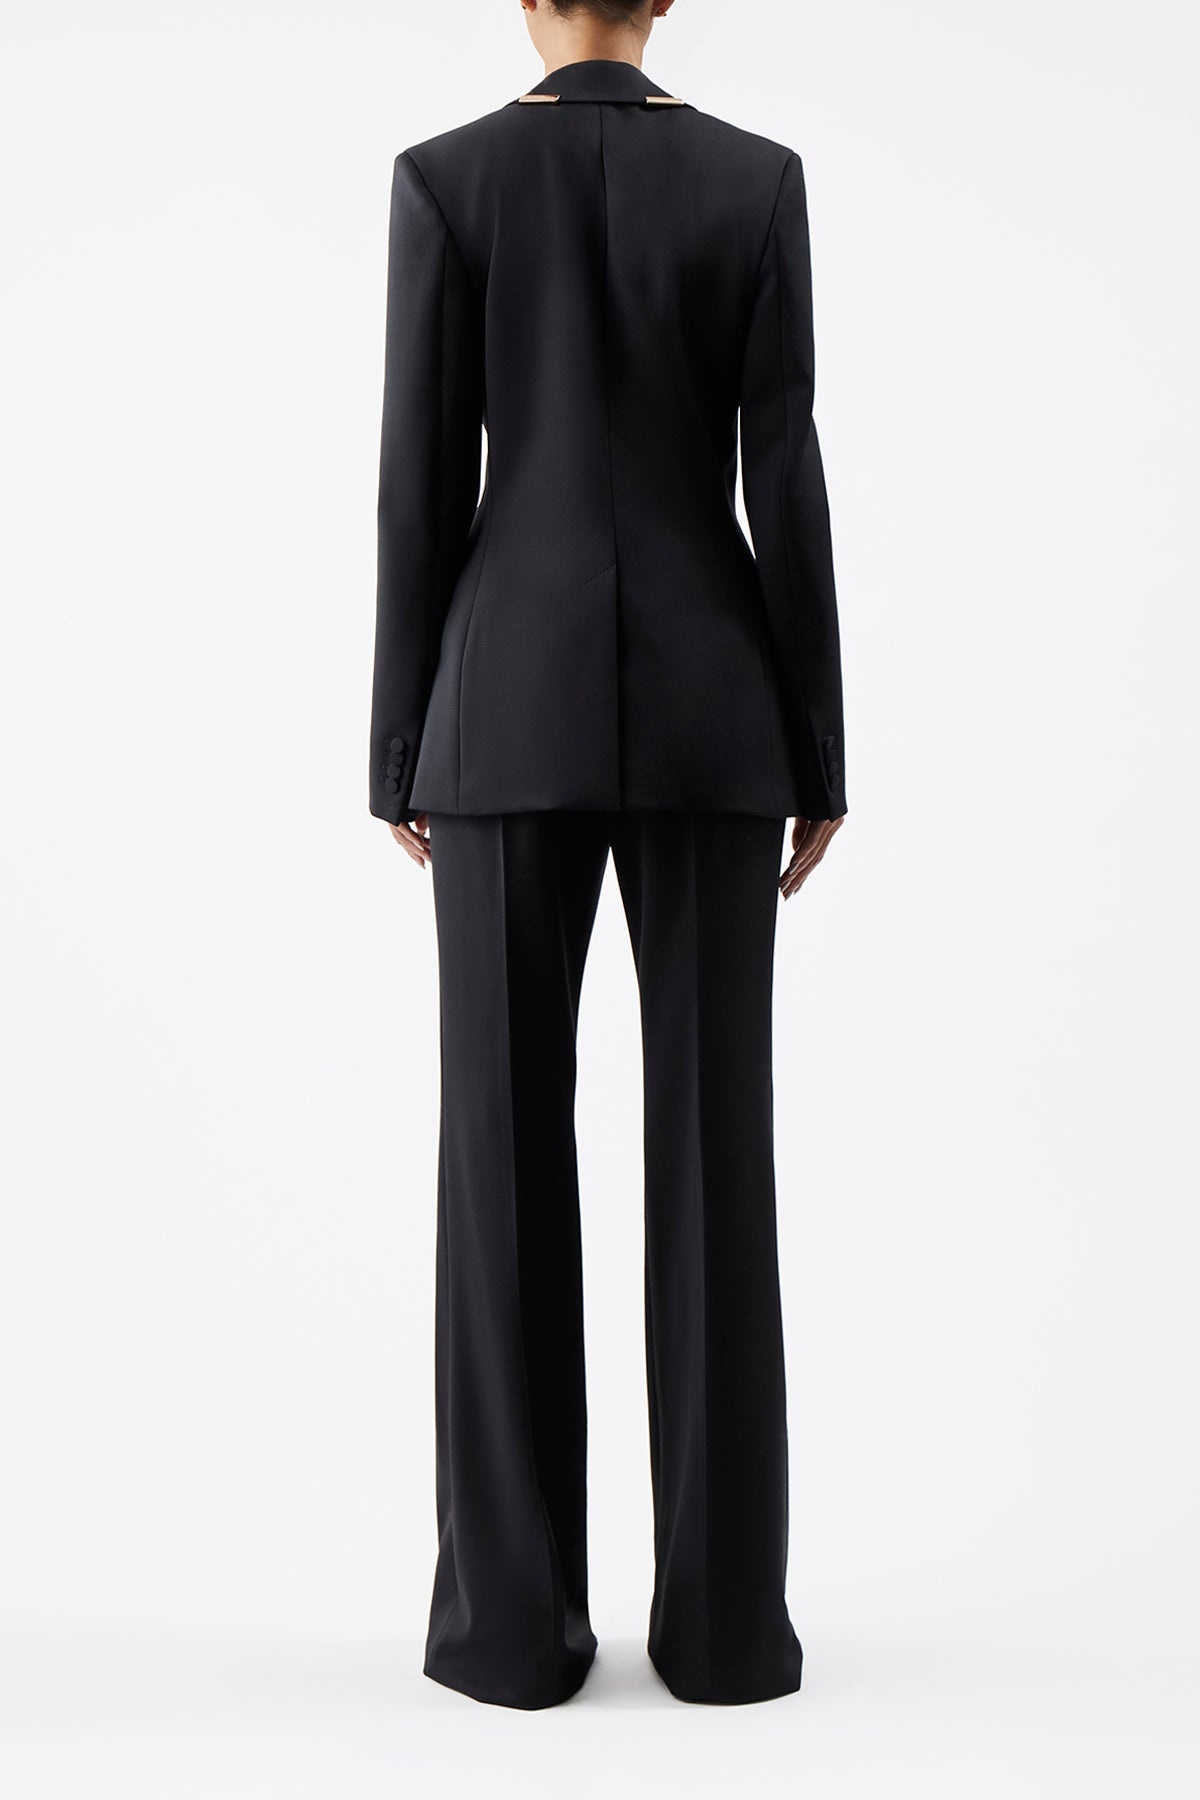 Leiva Blazer in Black Sportswear Wool with Gold Bars - 5